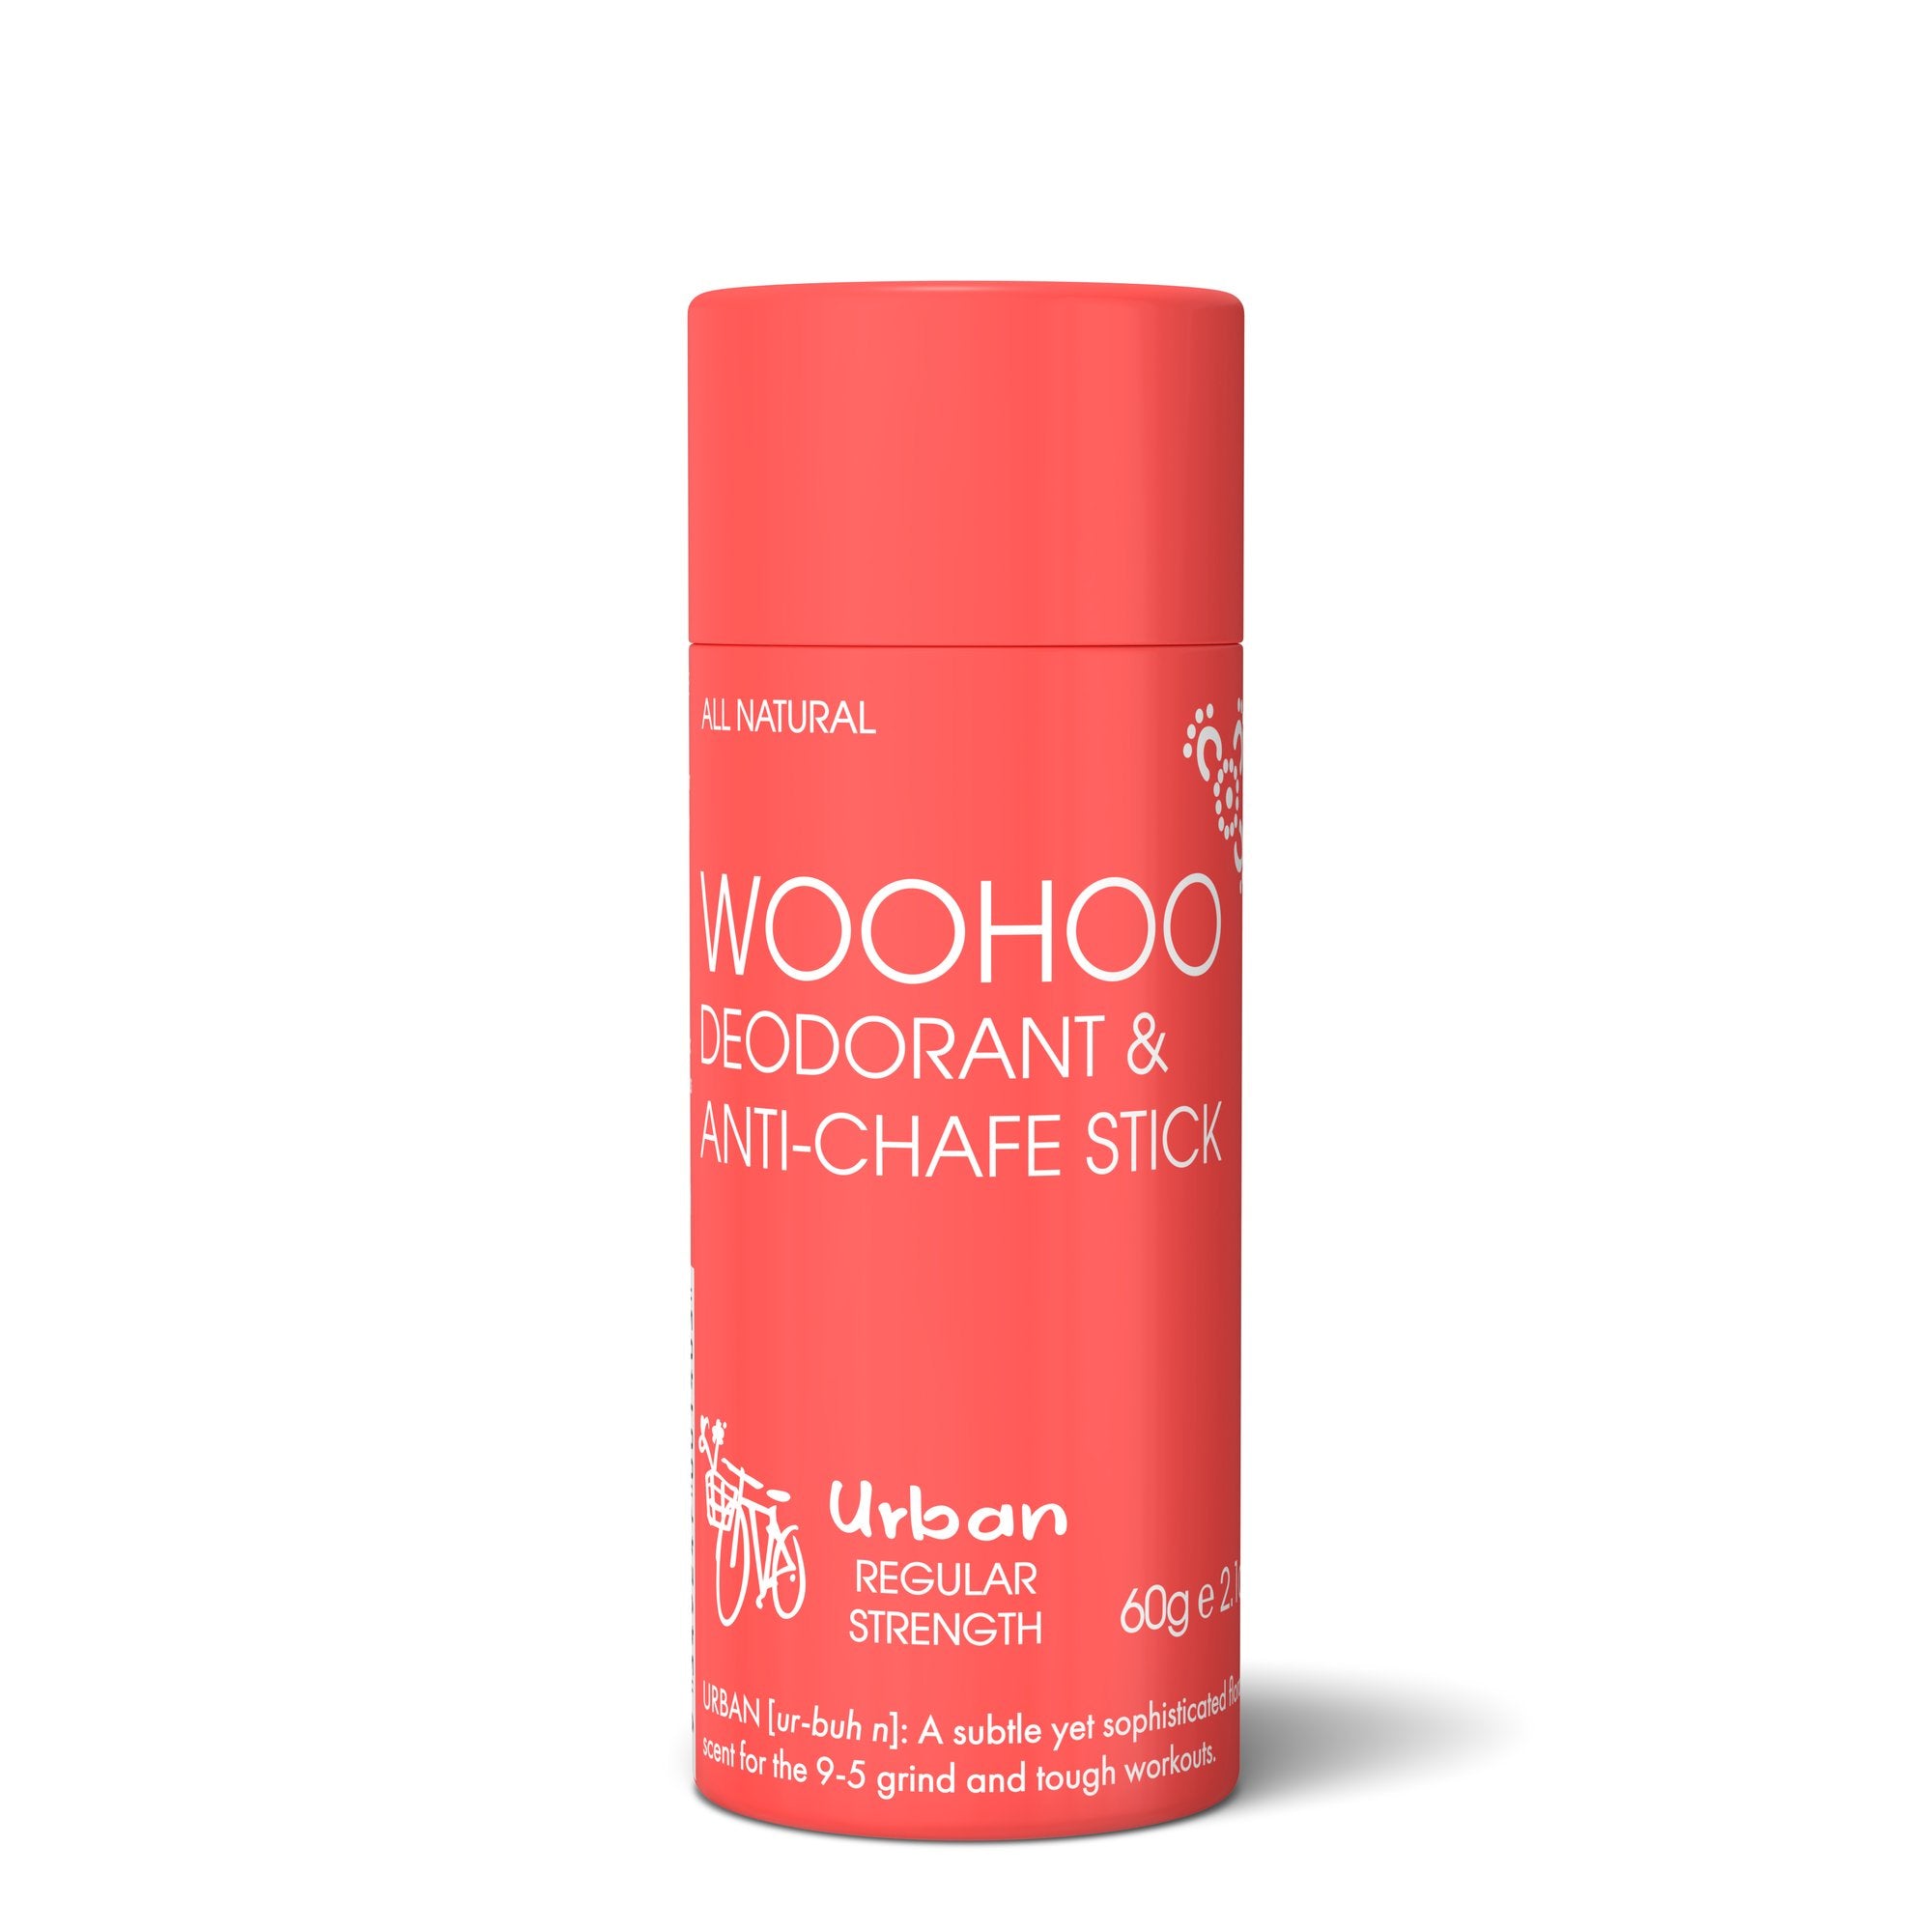 Woohoo Deodorant & Anti-Chafe Stick (Urban) 60g